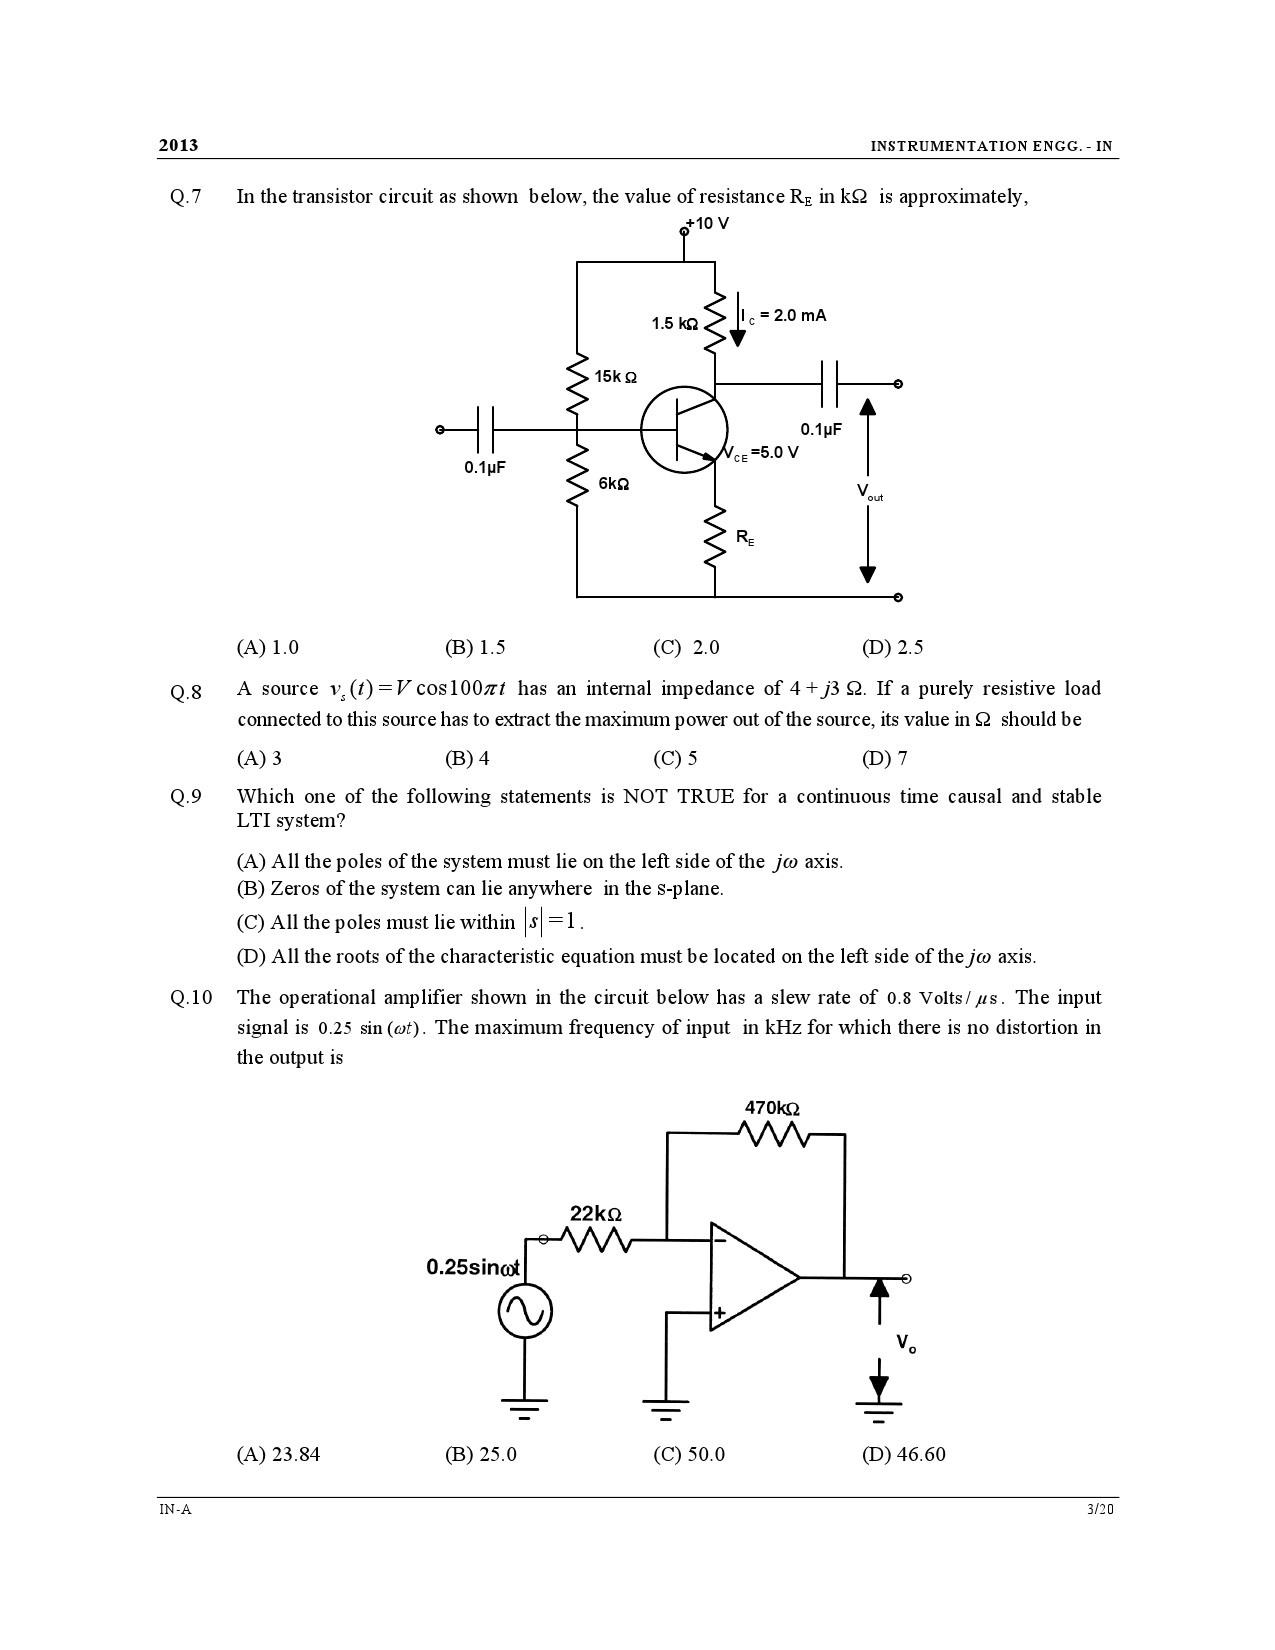 GATE Exam Question Paper 2013 Instrumentation Engineering 3